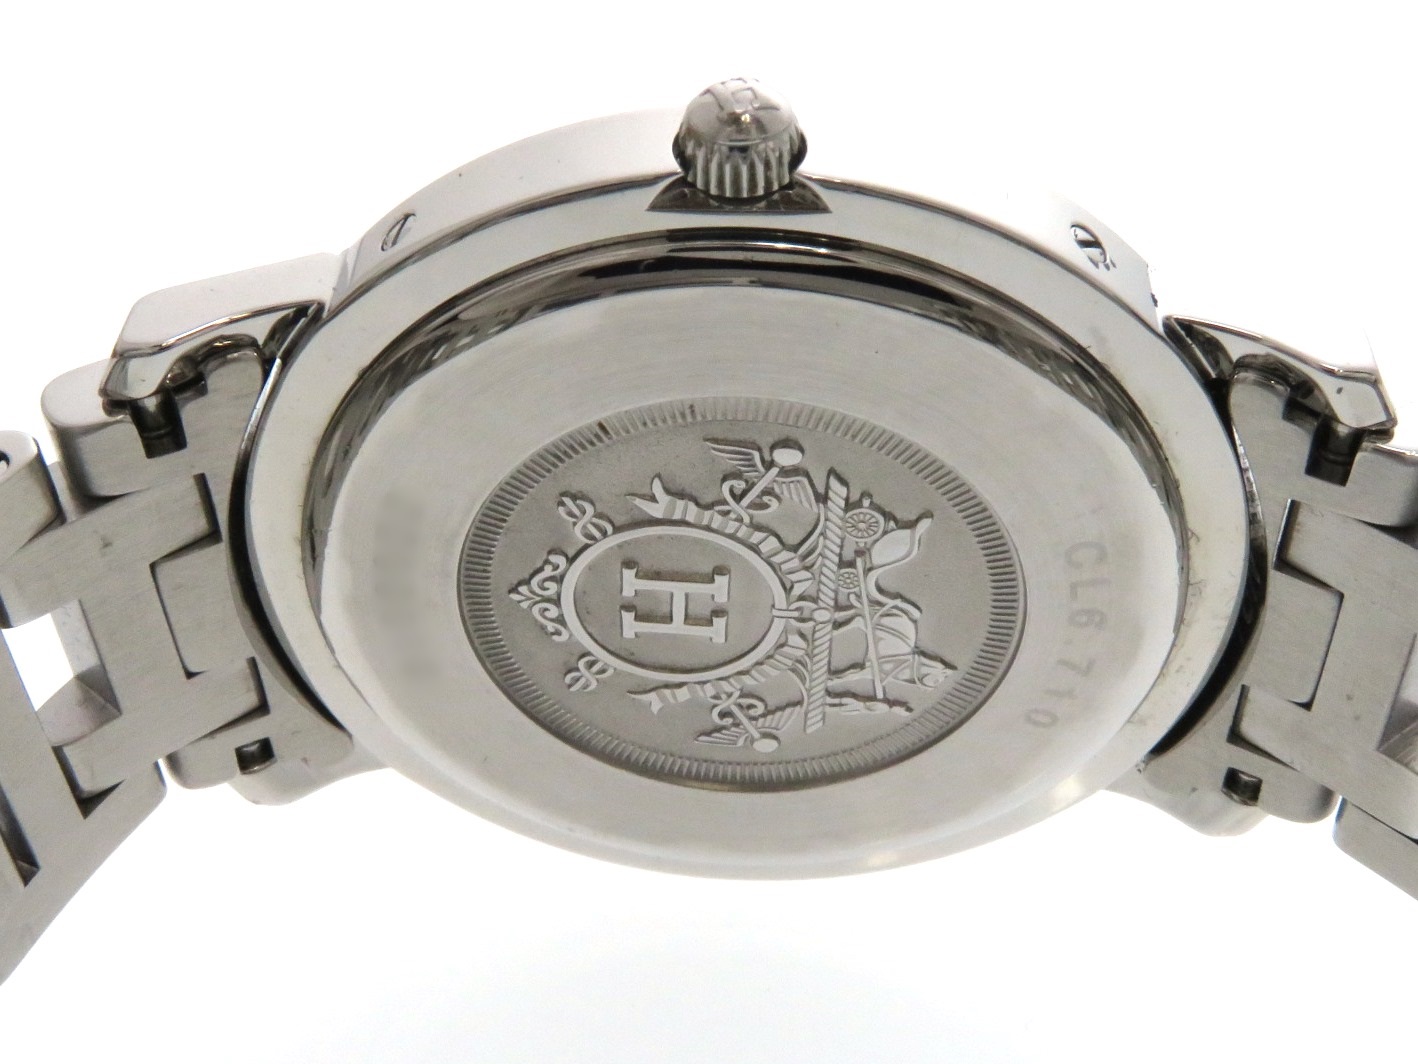 Vintage『HERMES』CL4.220 クリッパー 腕時計 箱+コマ付き